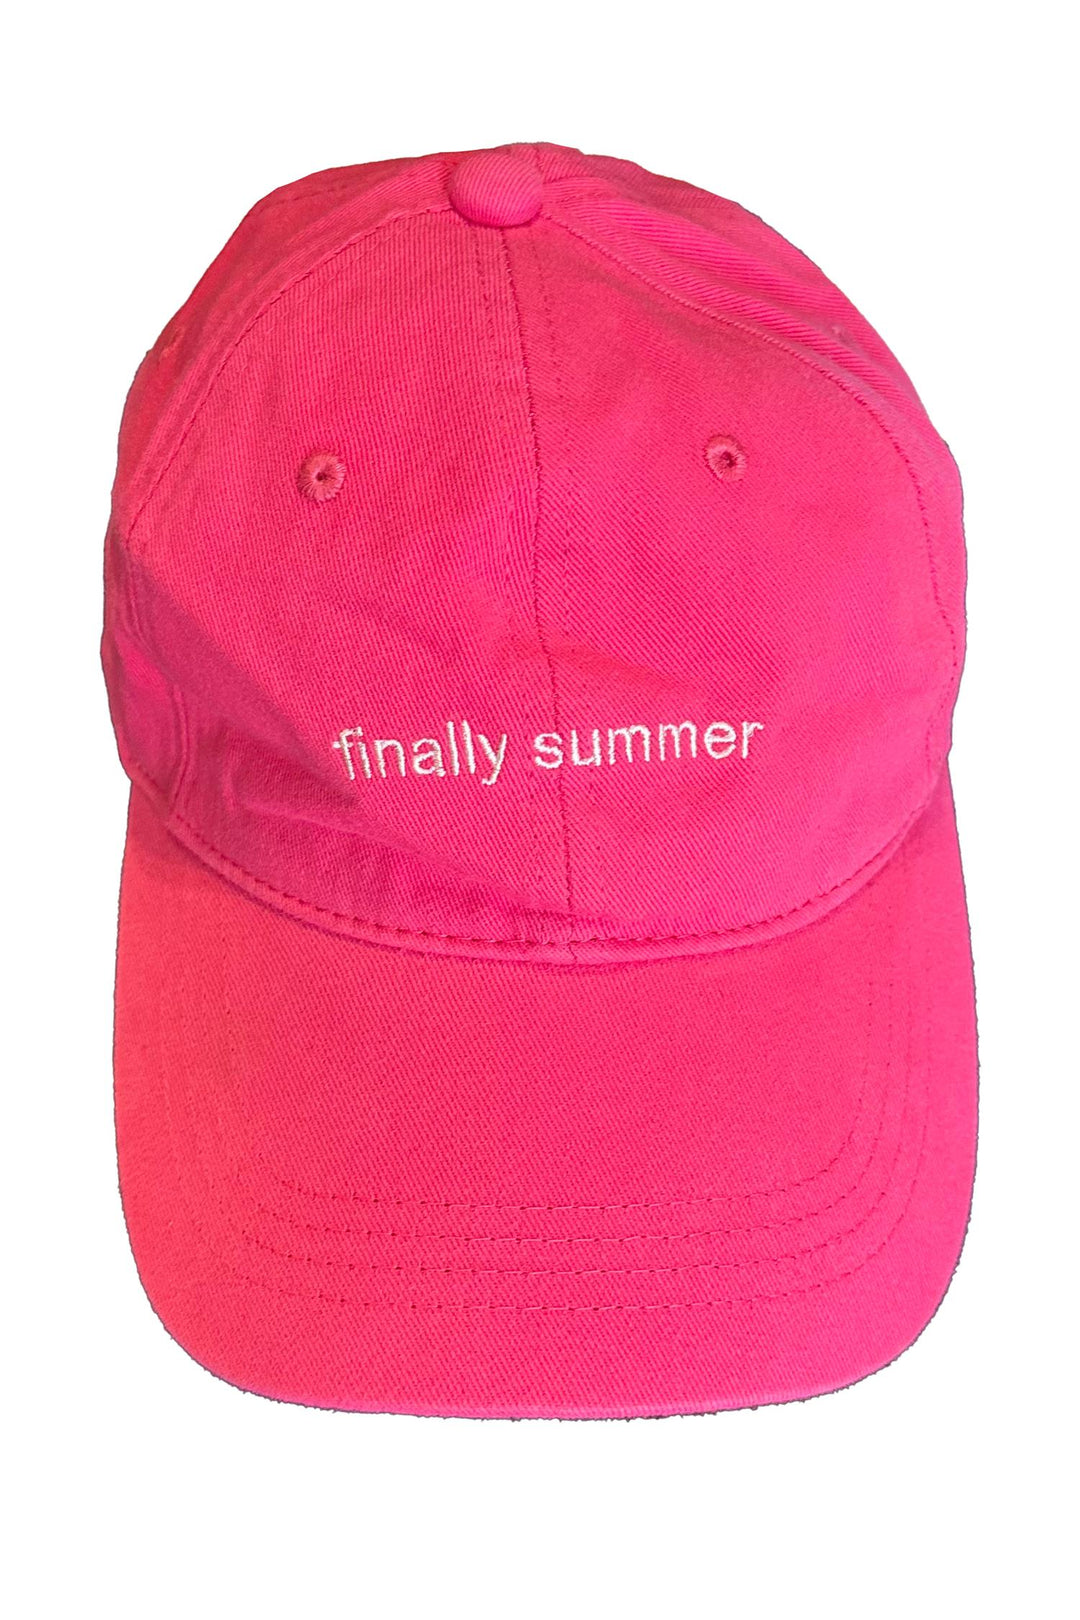 Limited Edition Finally Summer Cap Deep Pink